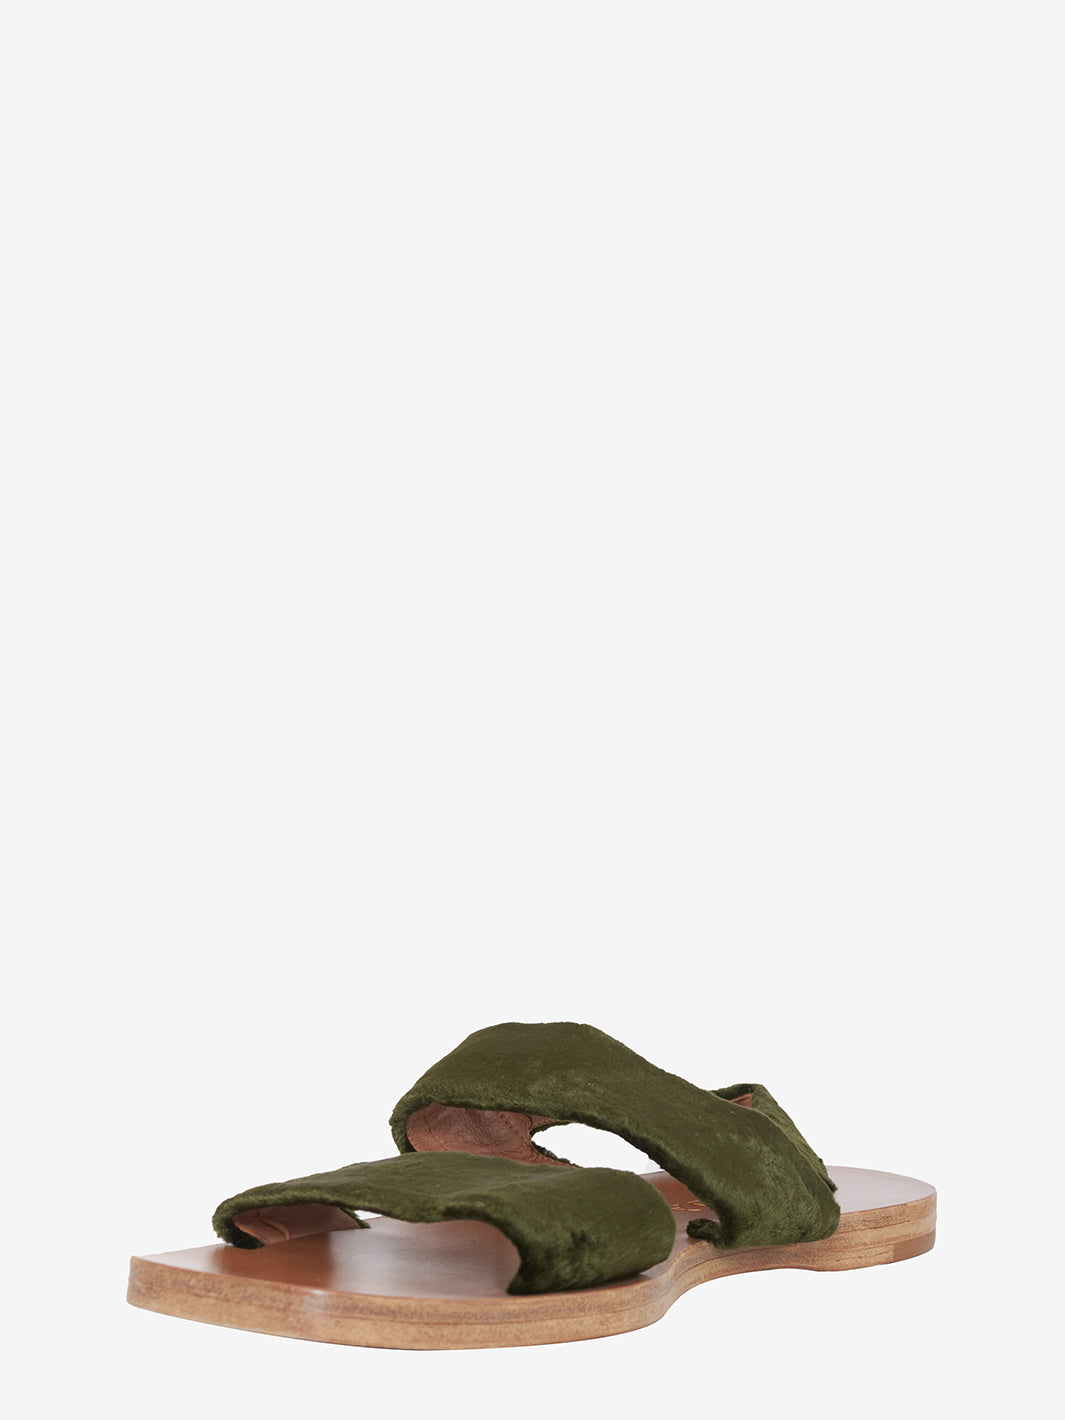 Prada Green leather sandal